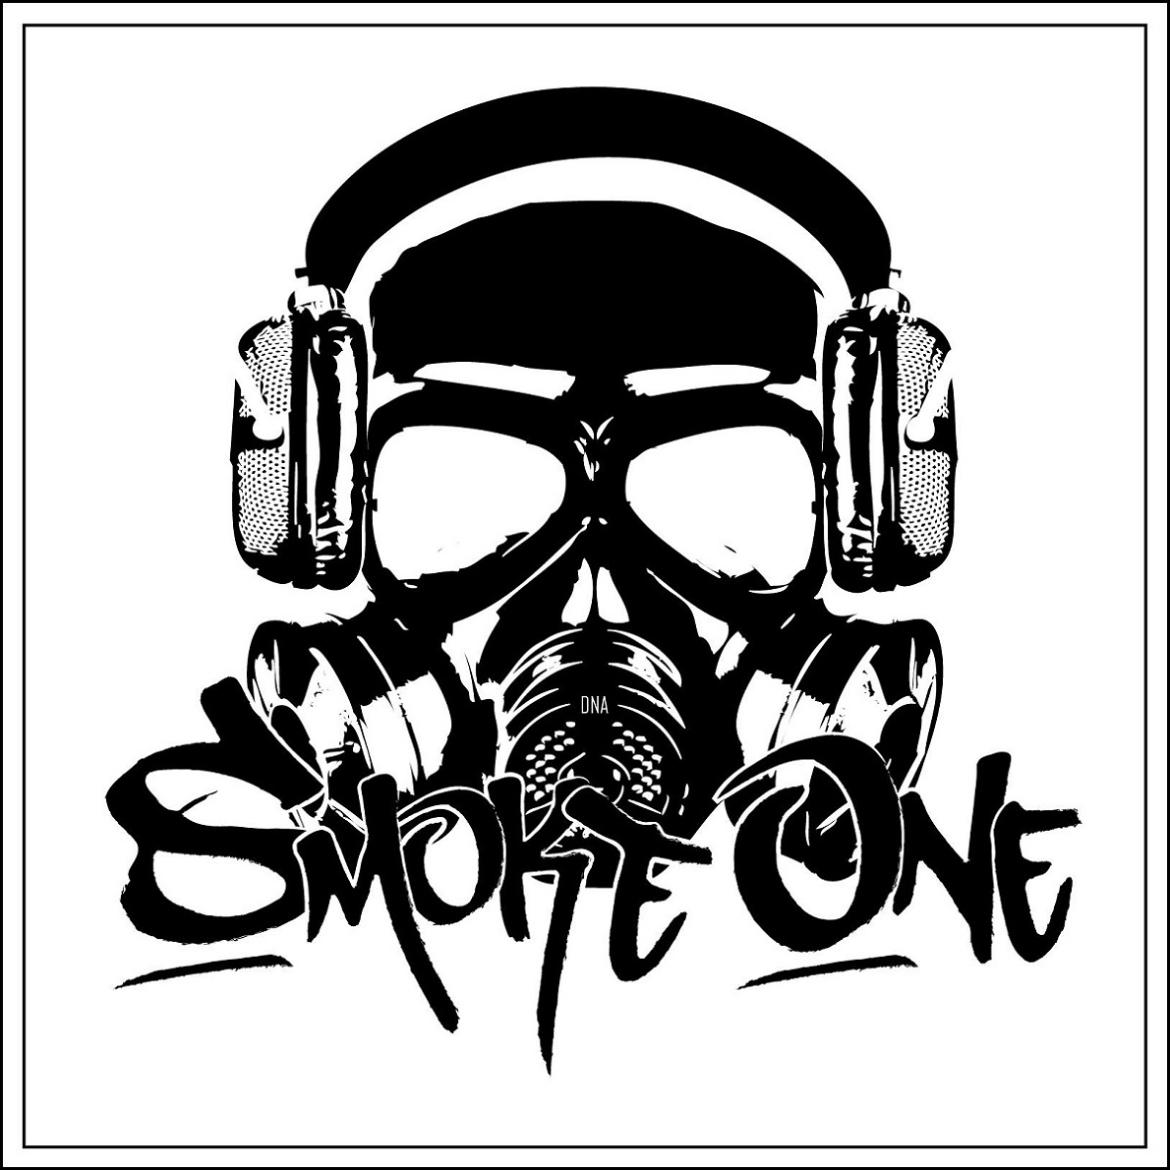 Smoke One